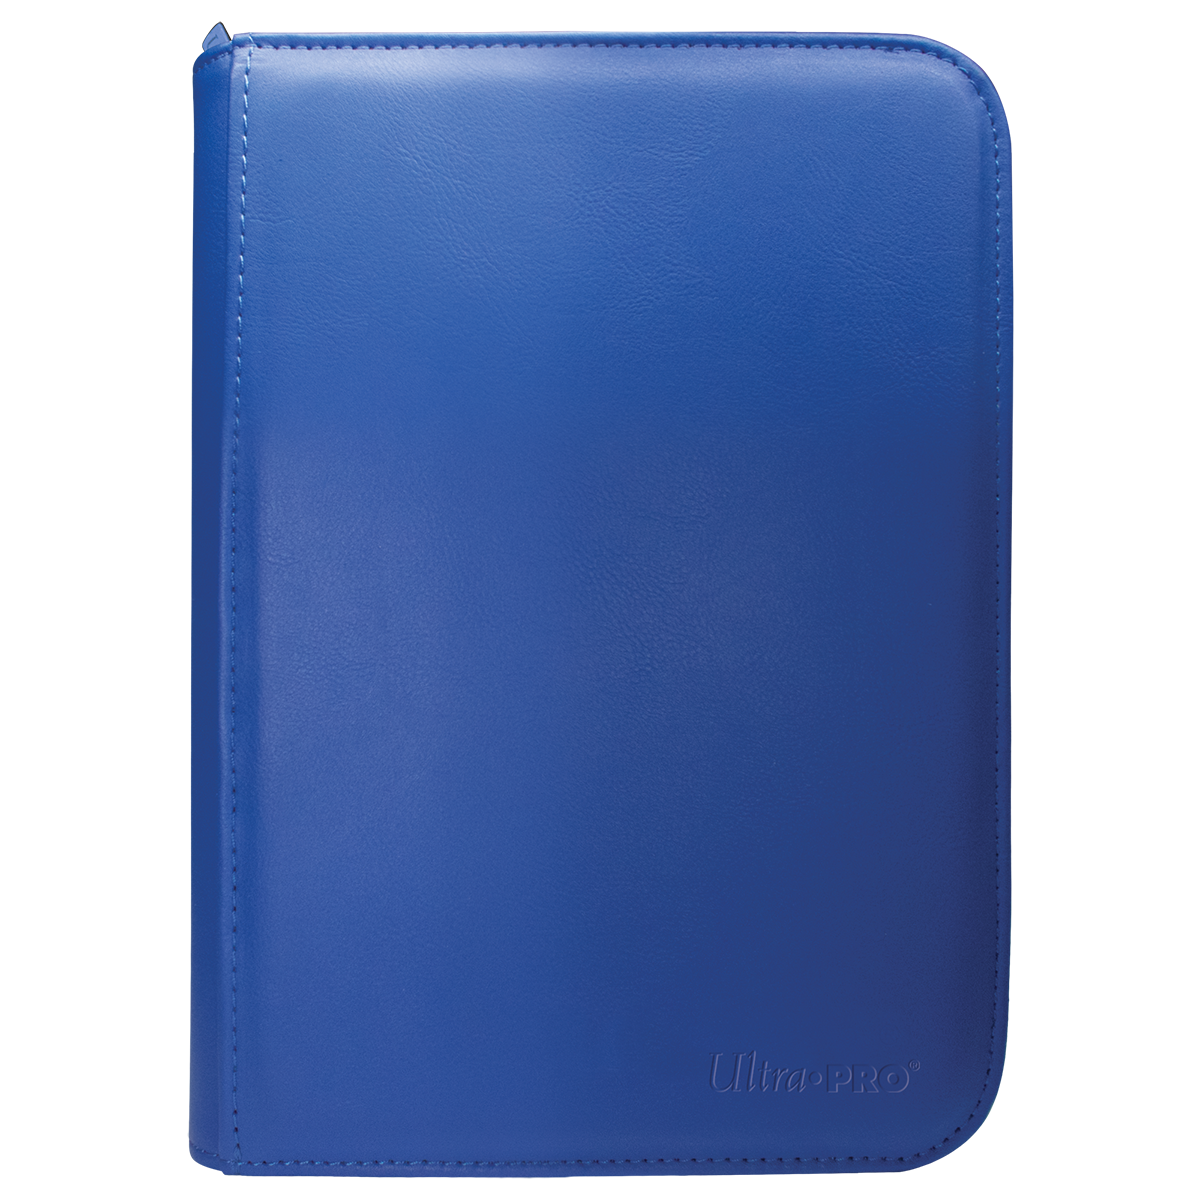 4-Pocket Ultra Pro Vivid Zippered Binder - Blue